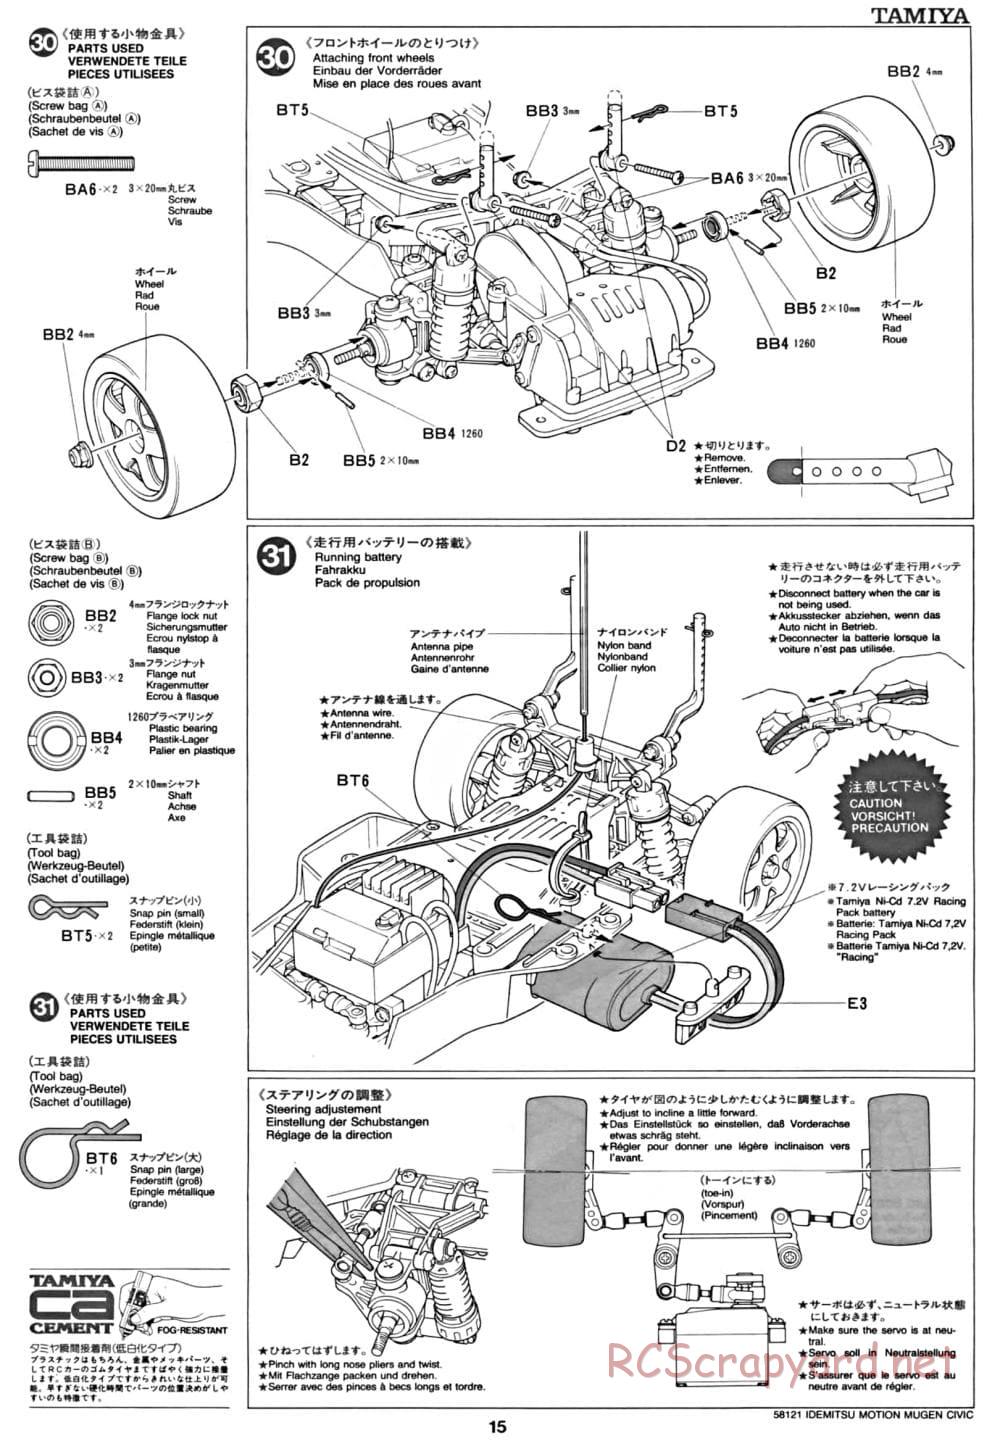 Tamiya - Idemitsu Motion Mugen Civic - FF-01 Chassis - Manual - Page 15